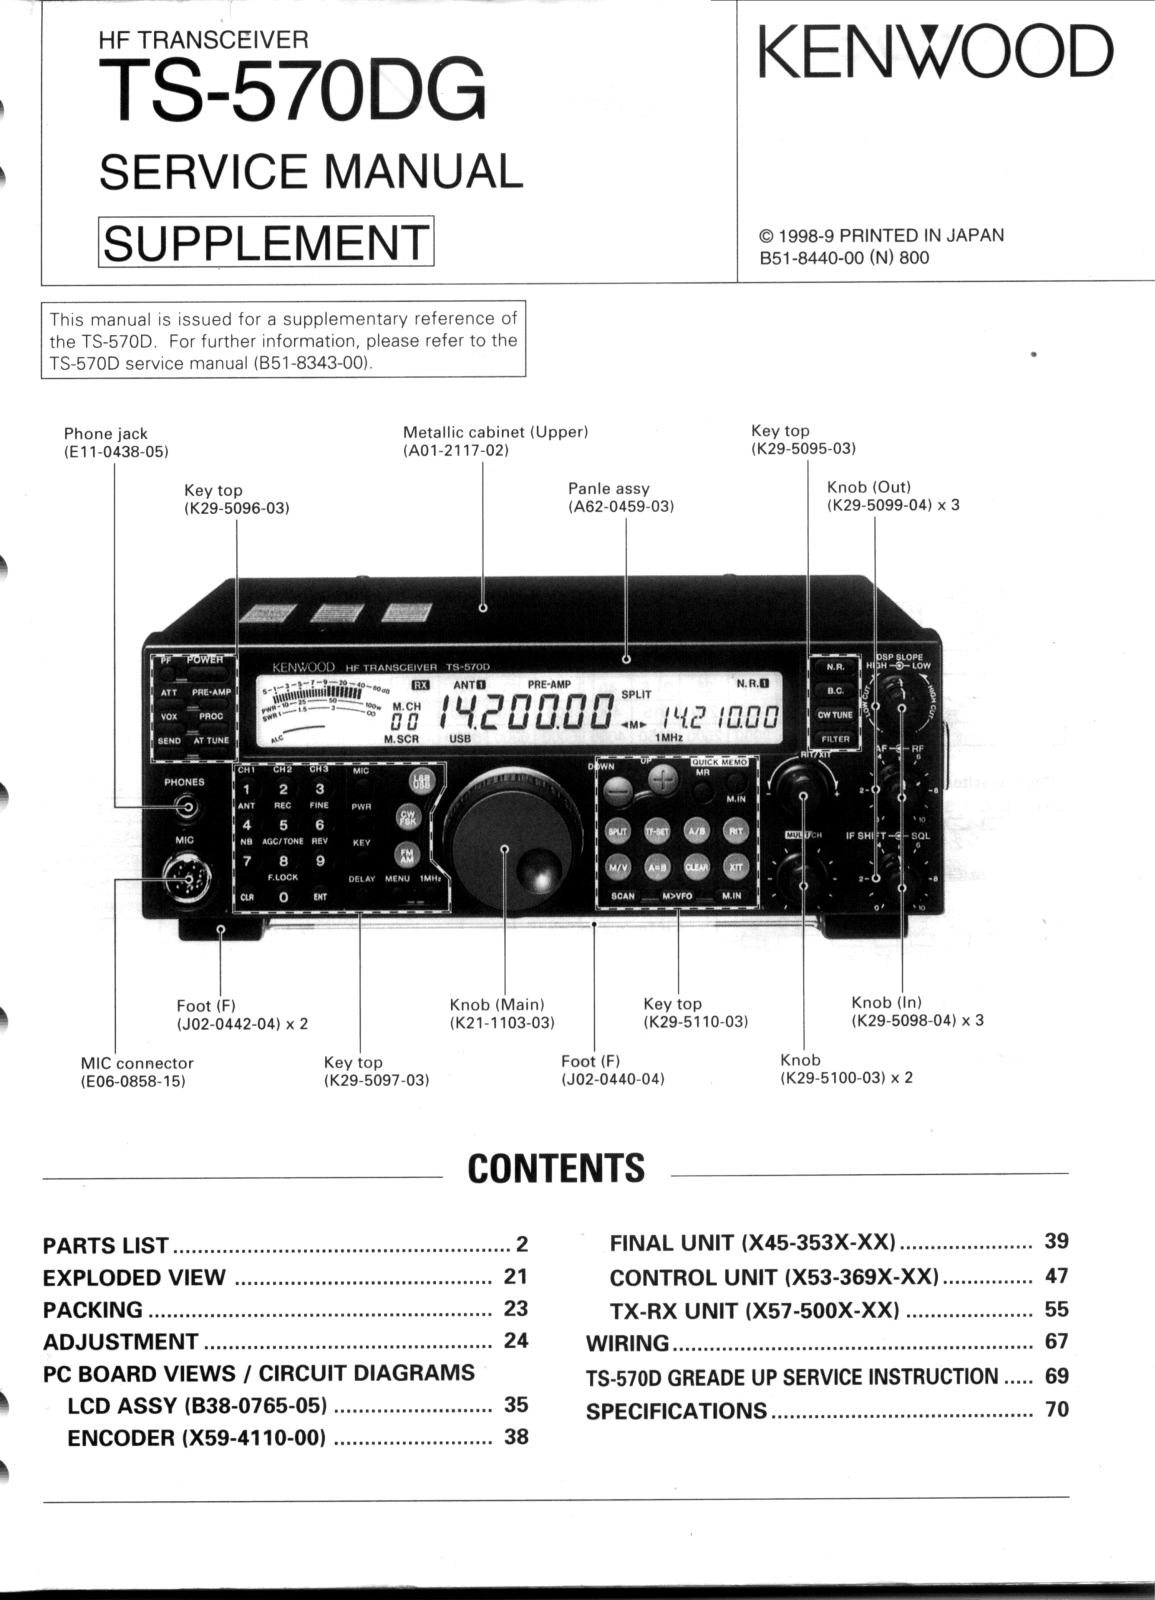 Kenwood TS-570-DG Service Manual